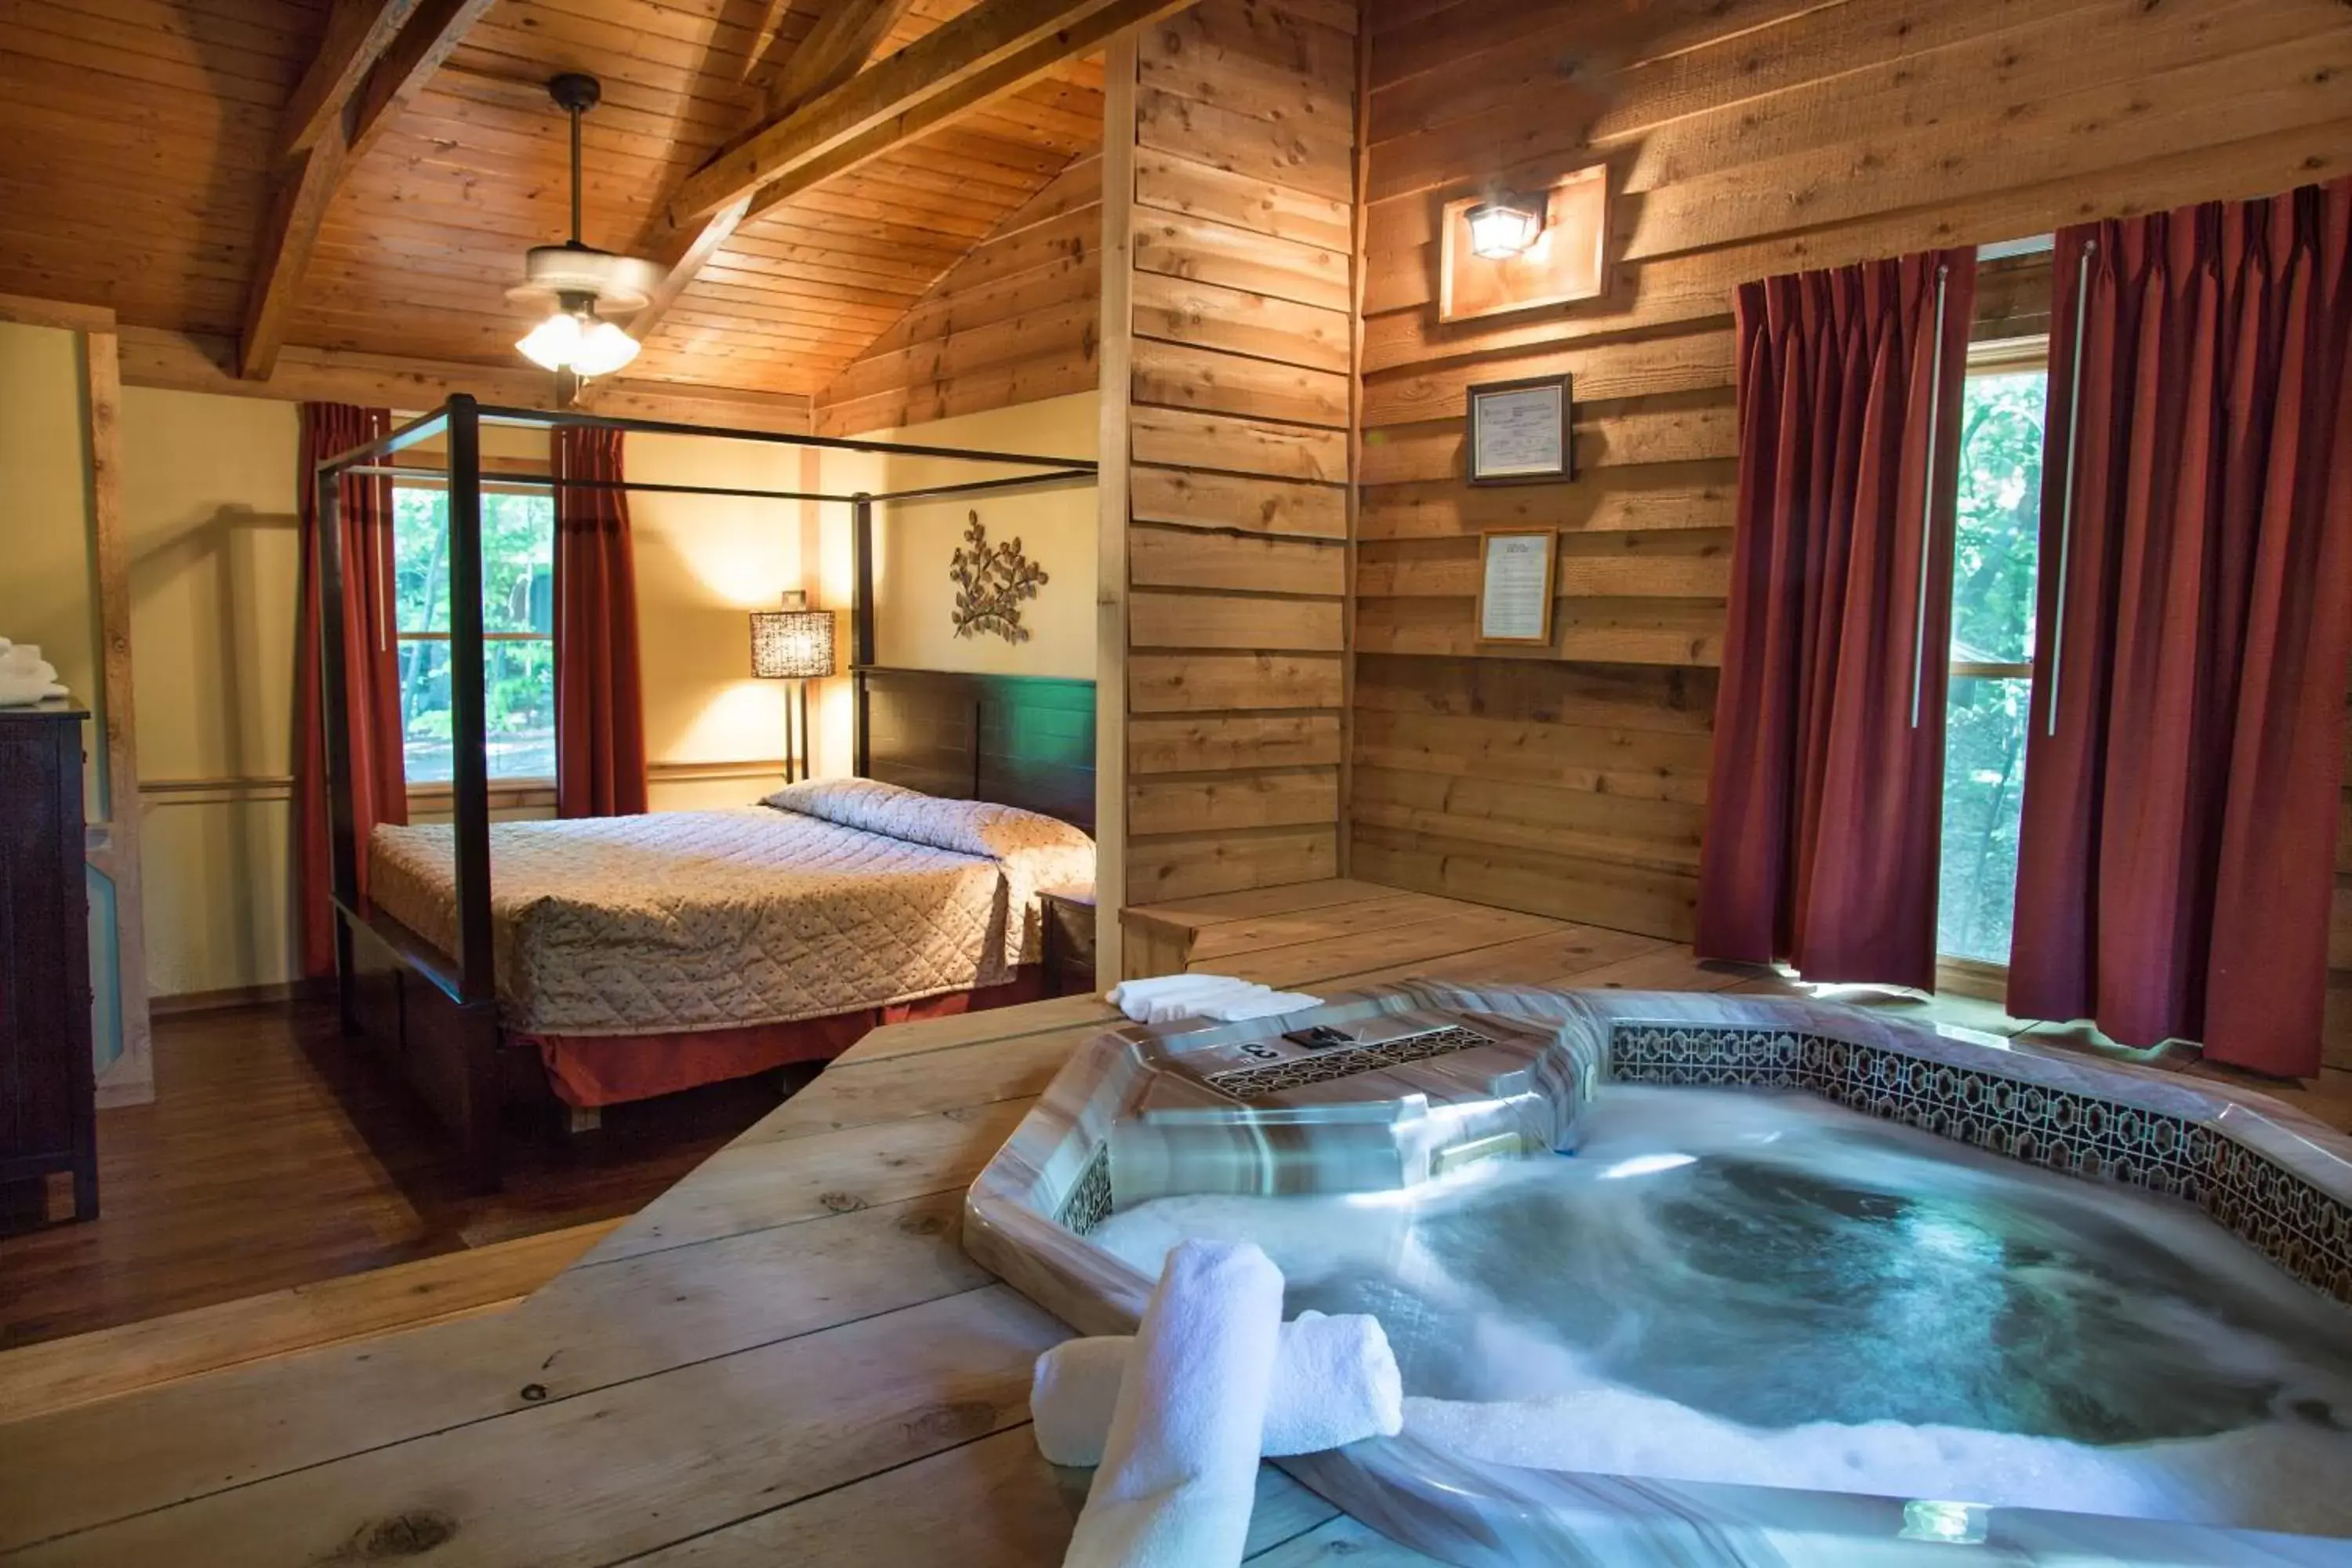 Hot Tub in Forrest Hills Mountain Resort